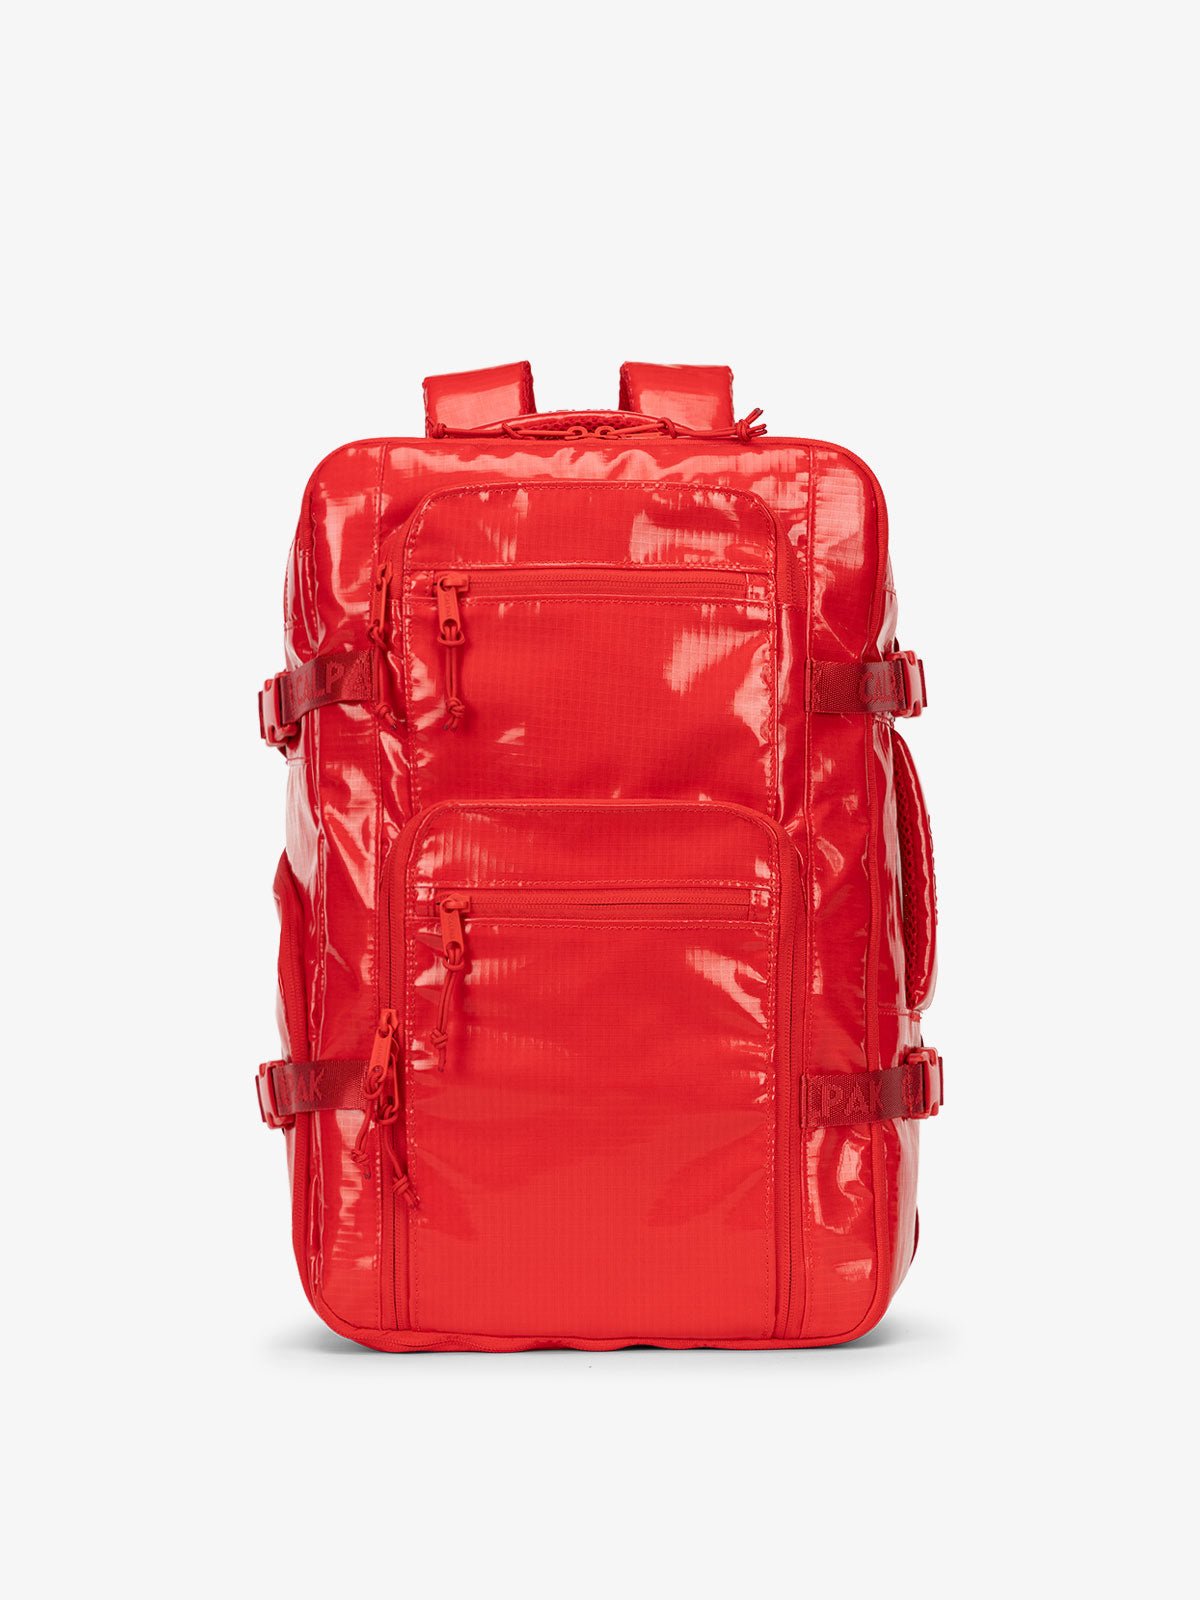 CALPAK Terra 26L laptop backpack duffel in red